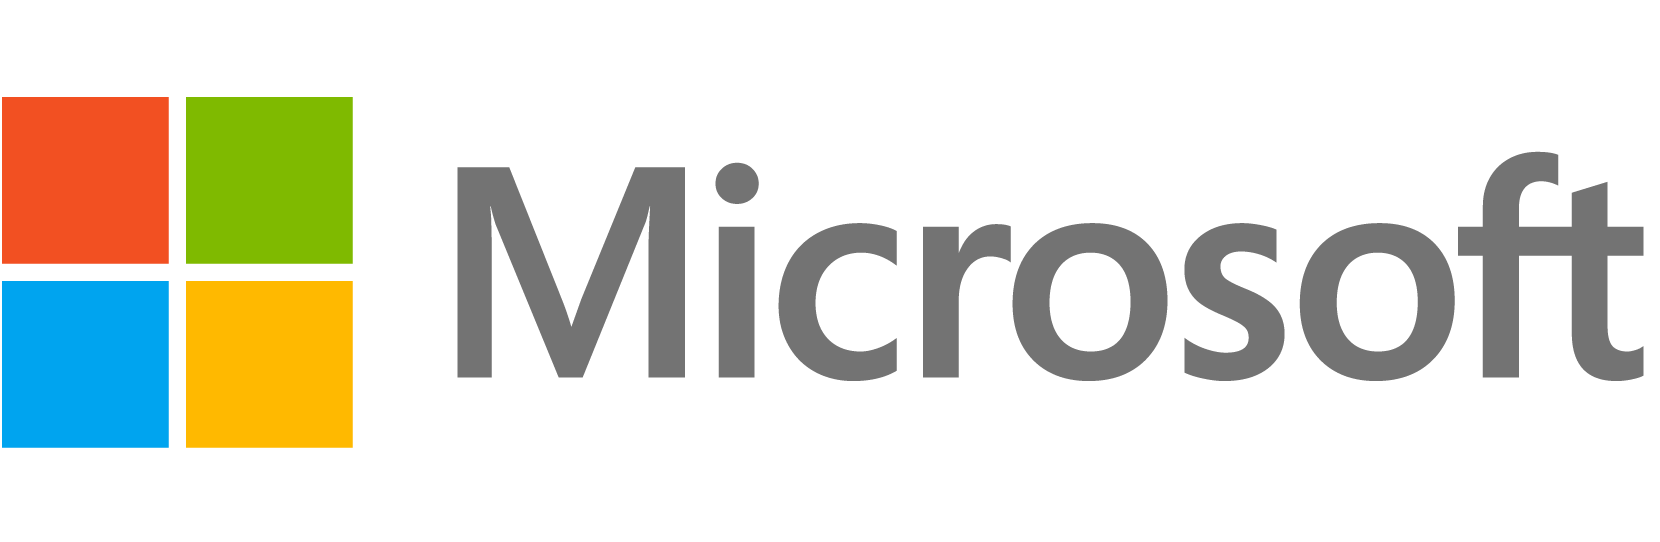 Windows 12 Logo - SQL Server 2008 and Windows Server 2008 End of Extended Support